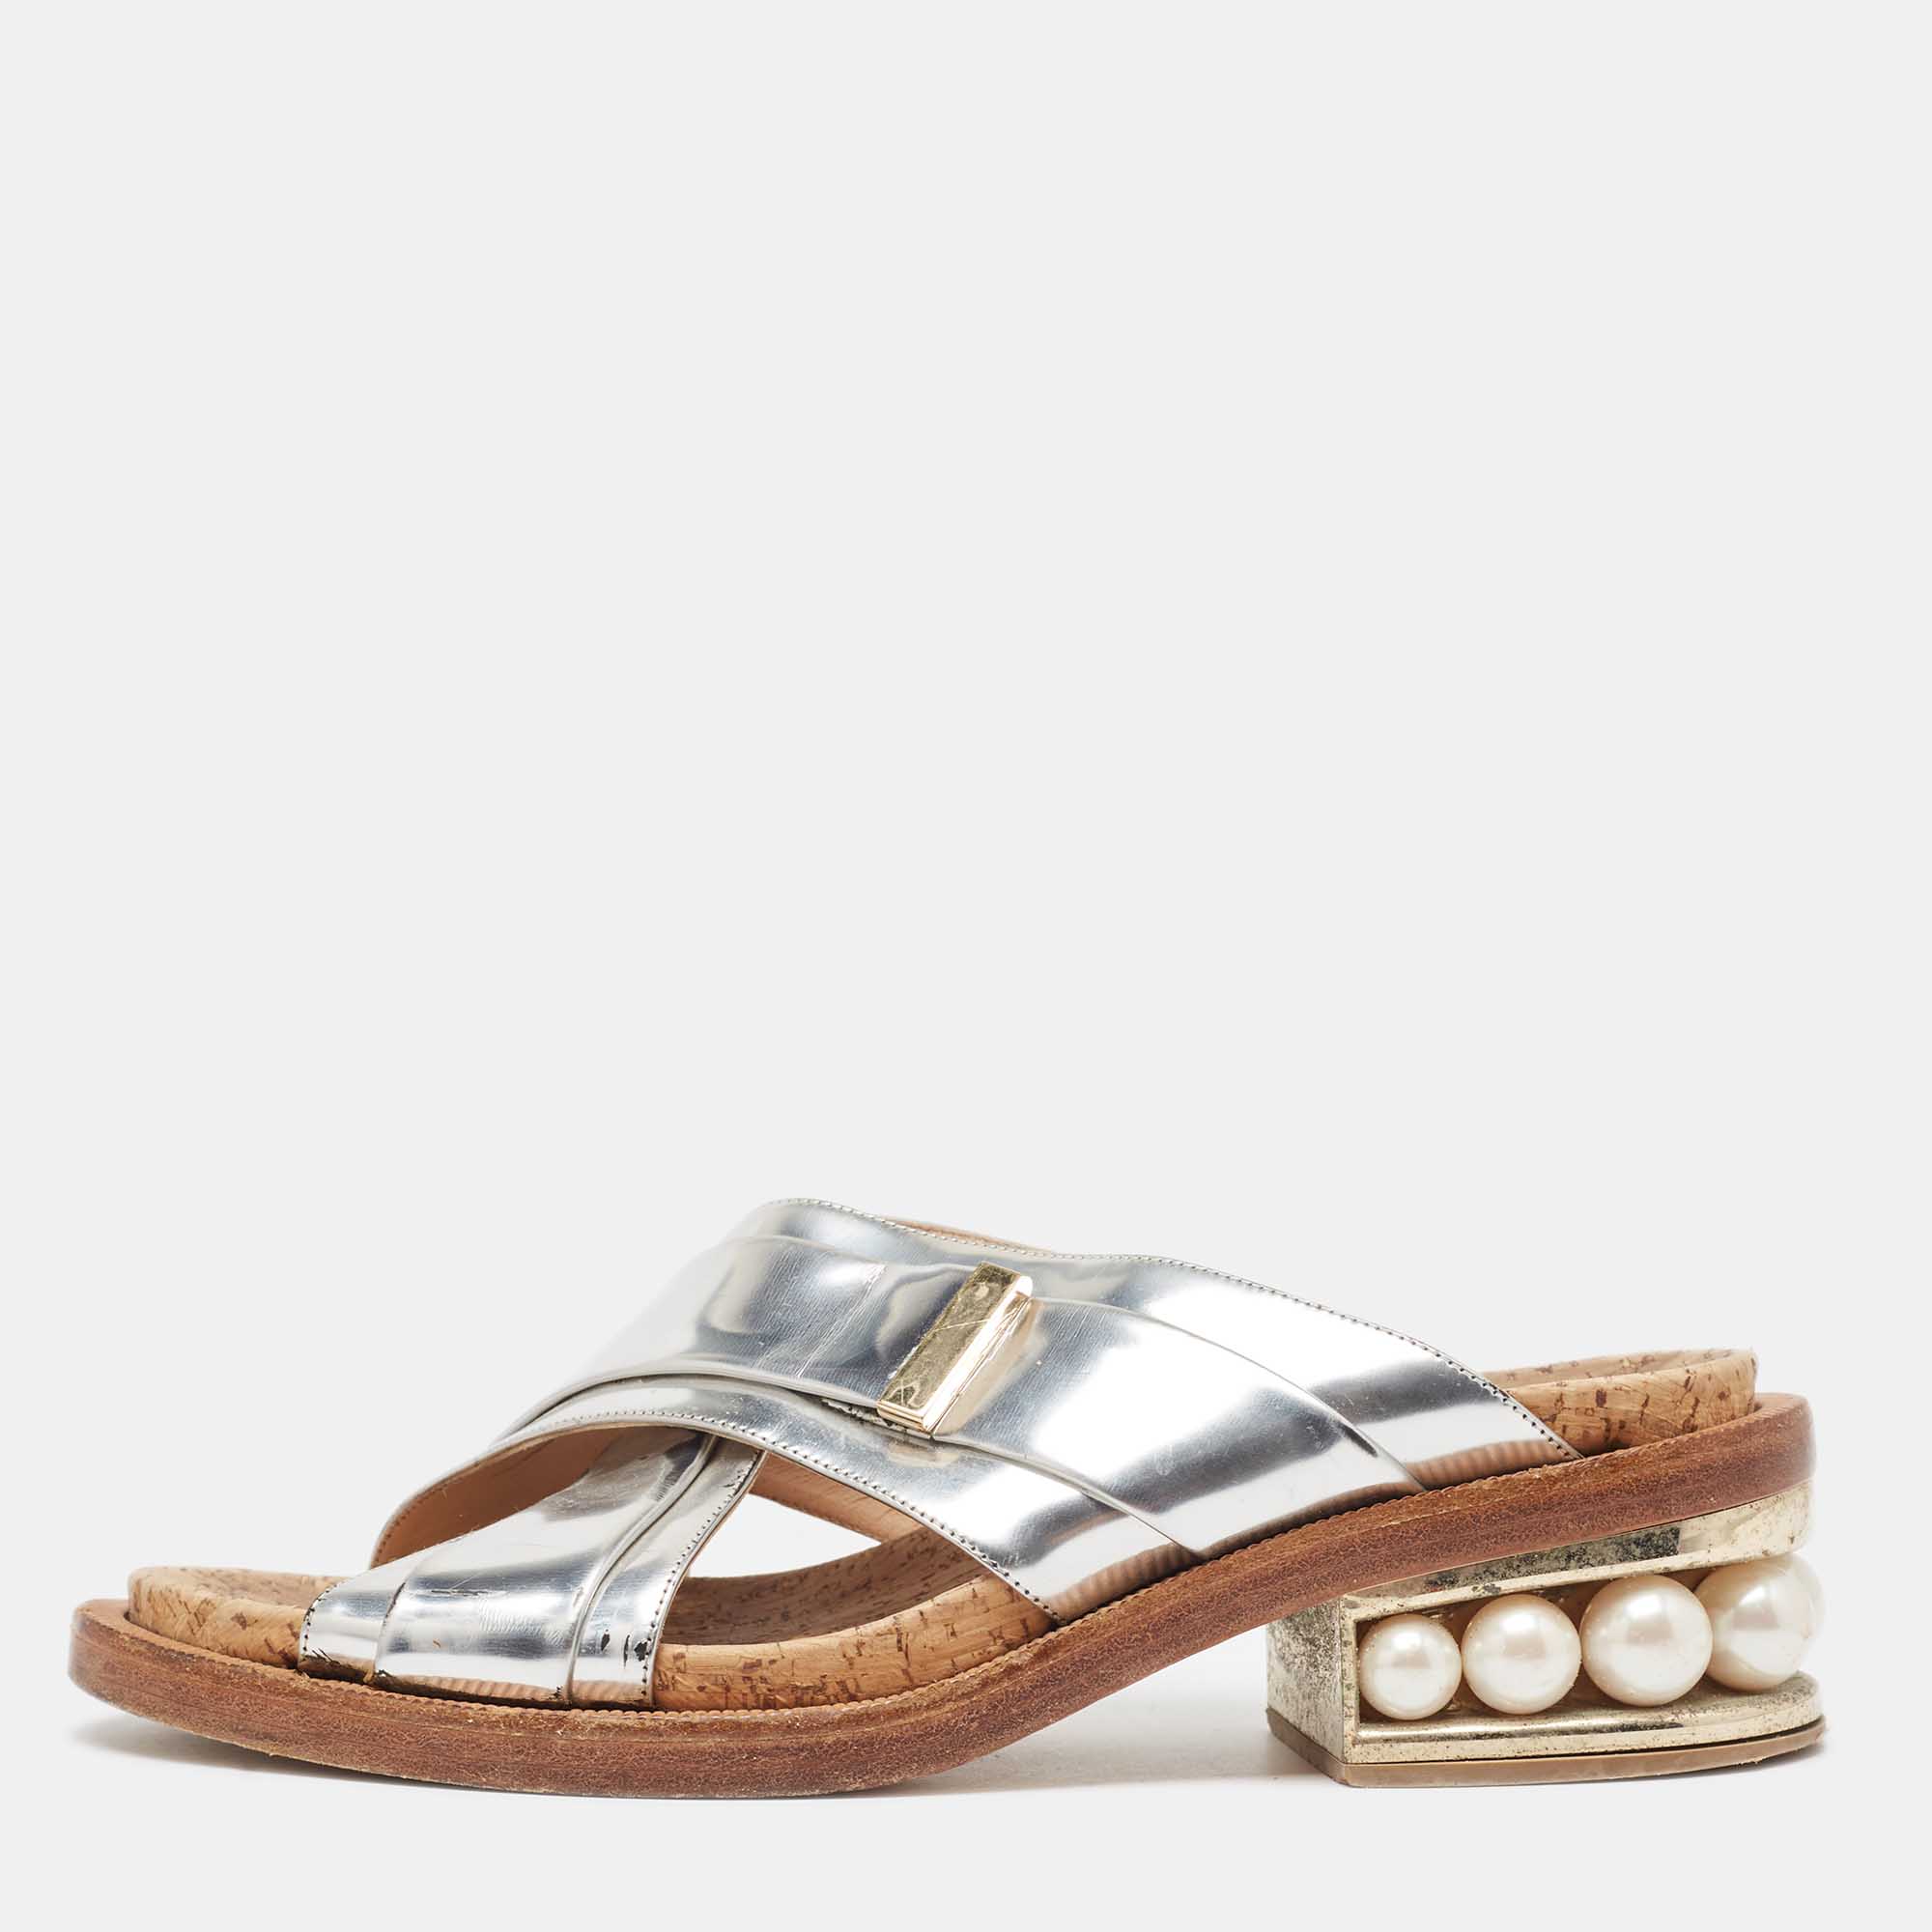 Nicholas kirkwood silver leather faux pearl heel slide sandals size 39